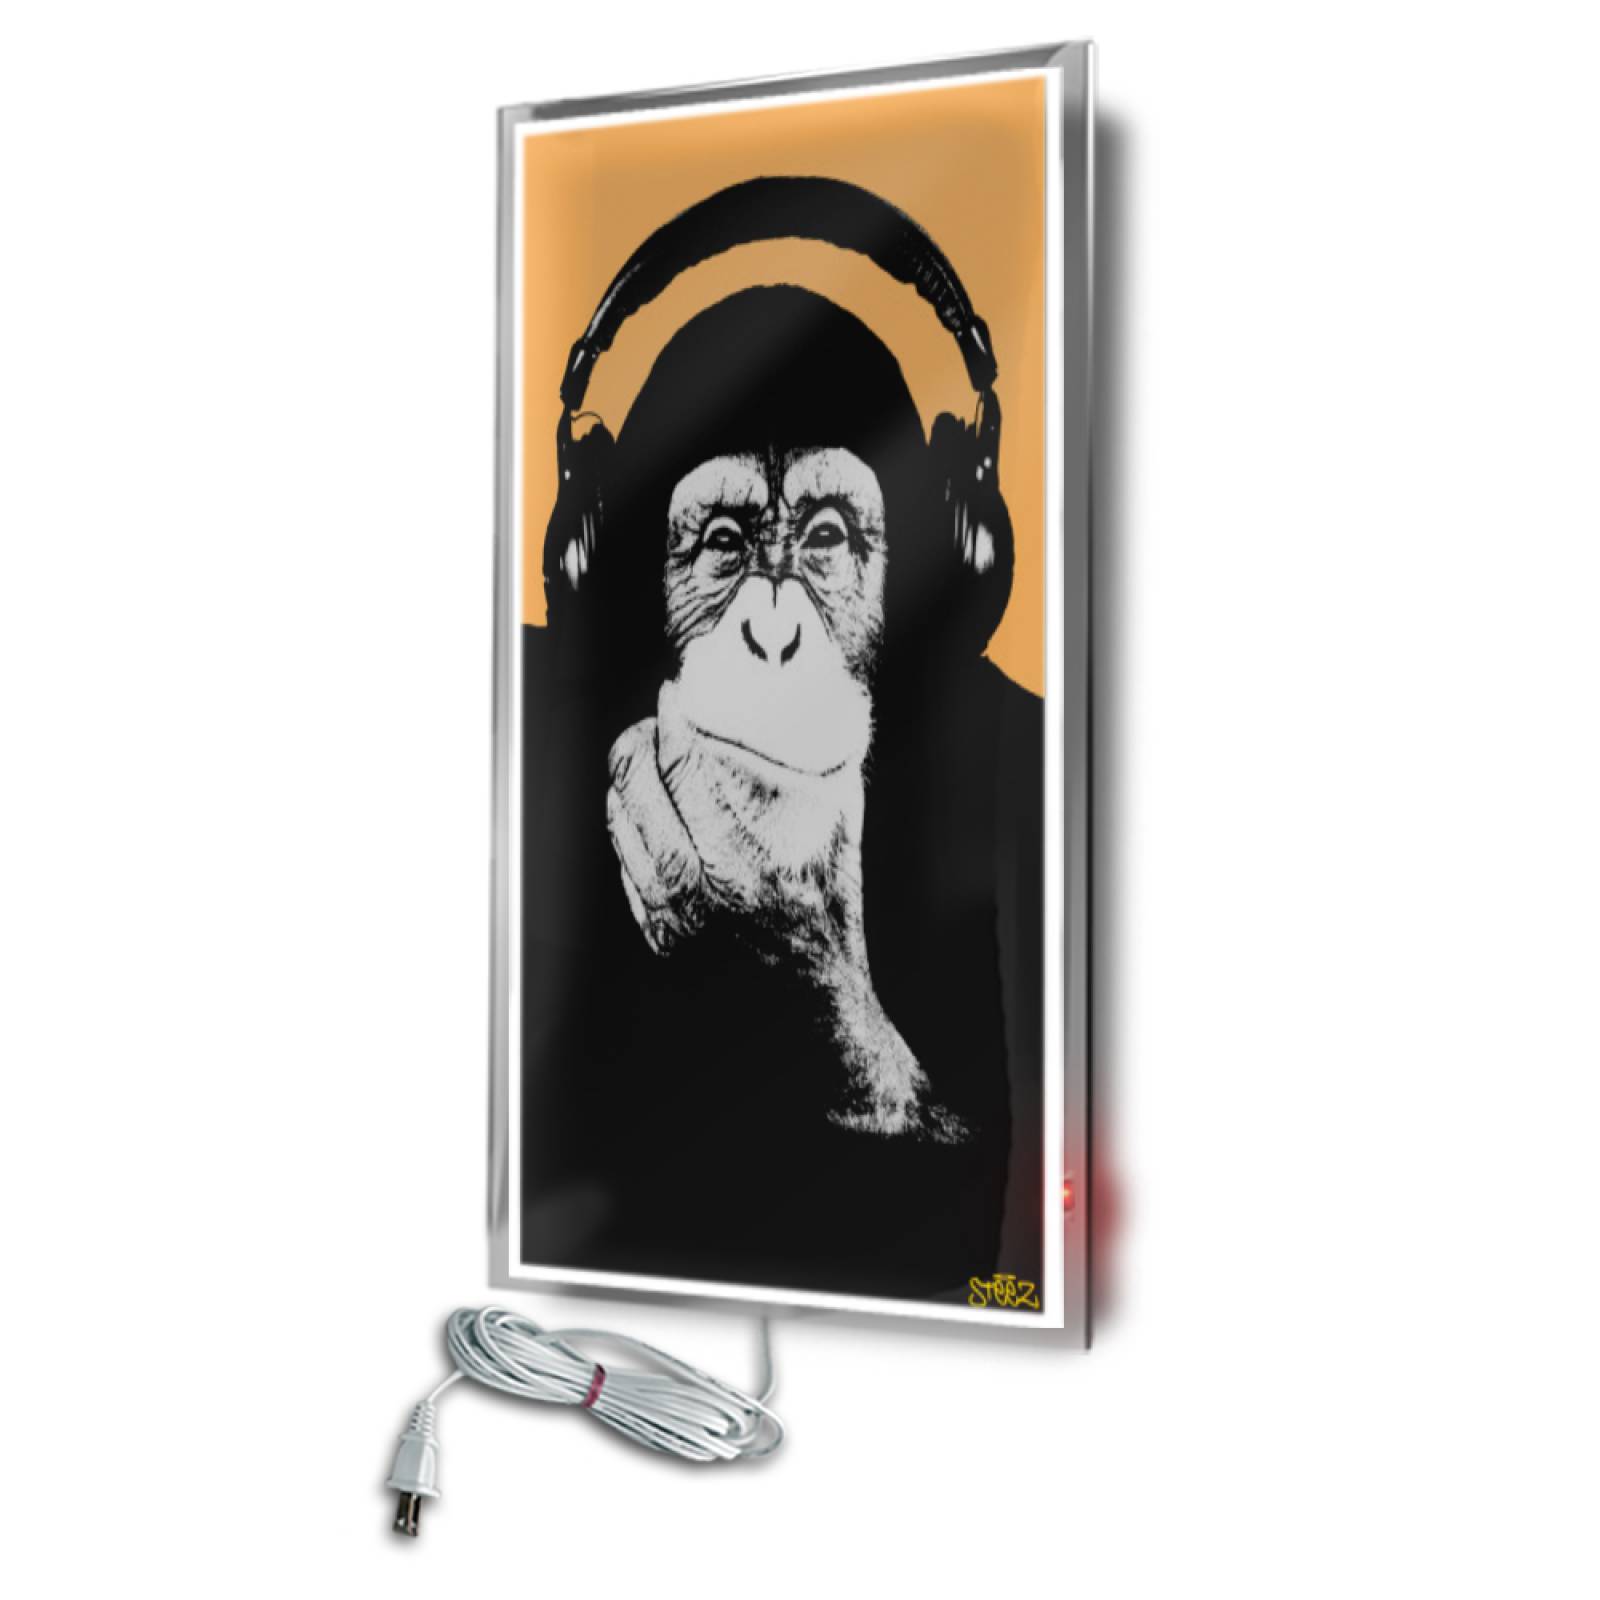 Calefactor de Panel infrarrojo en Cristal para Pared, California Wave Headphone Monkey de 380W 60x90cm, Mod: 067CaSol